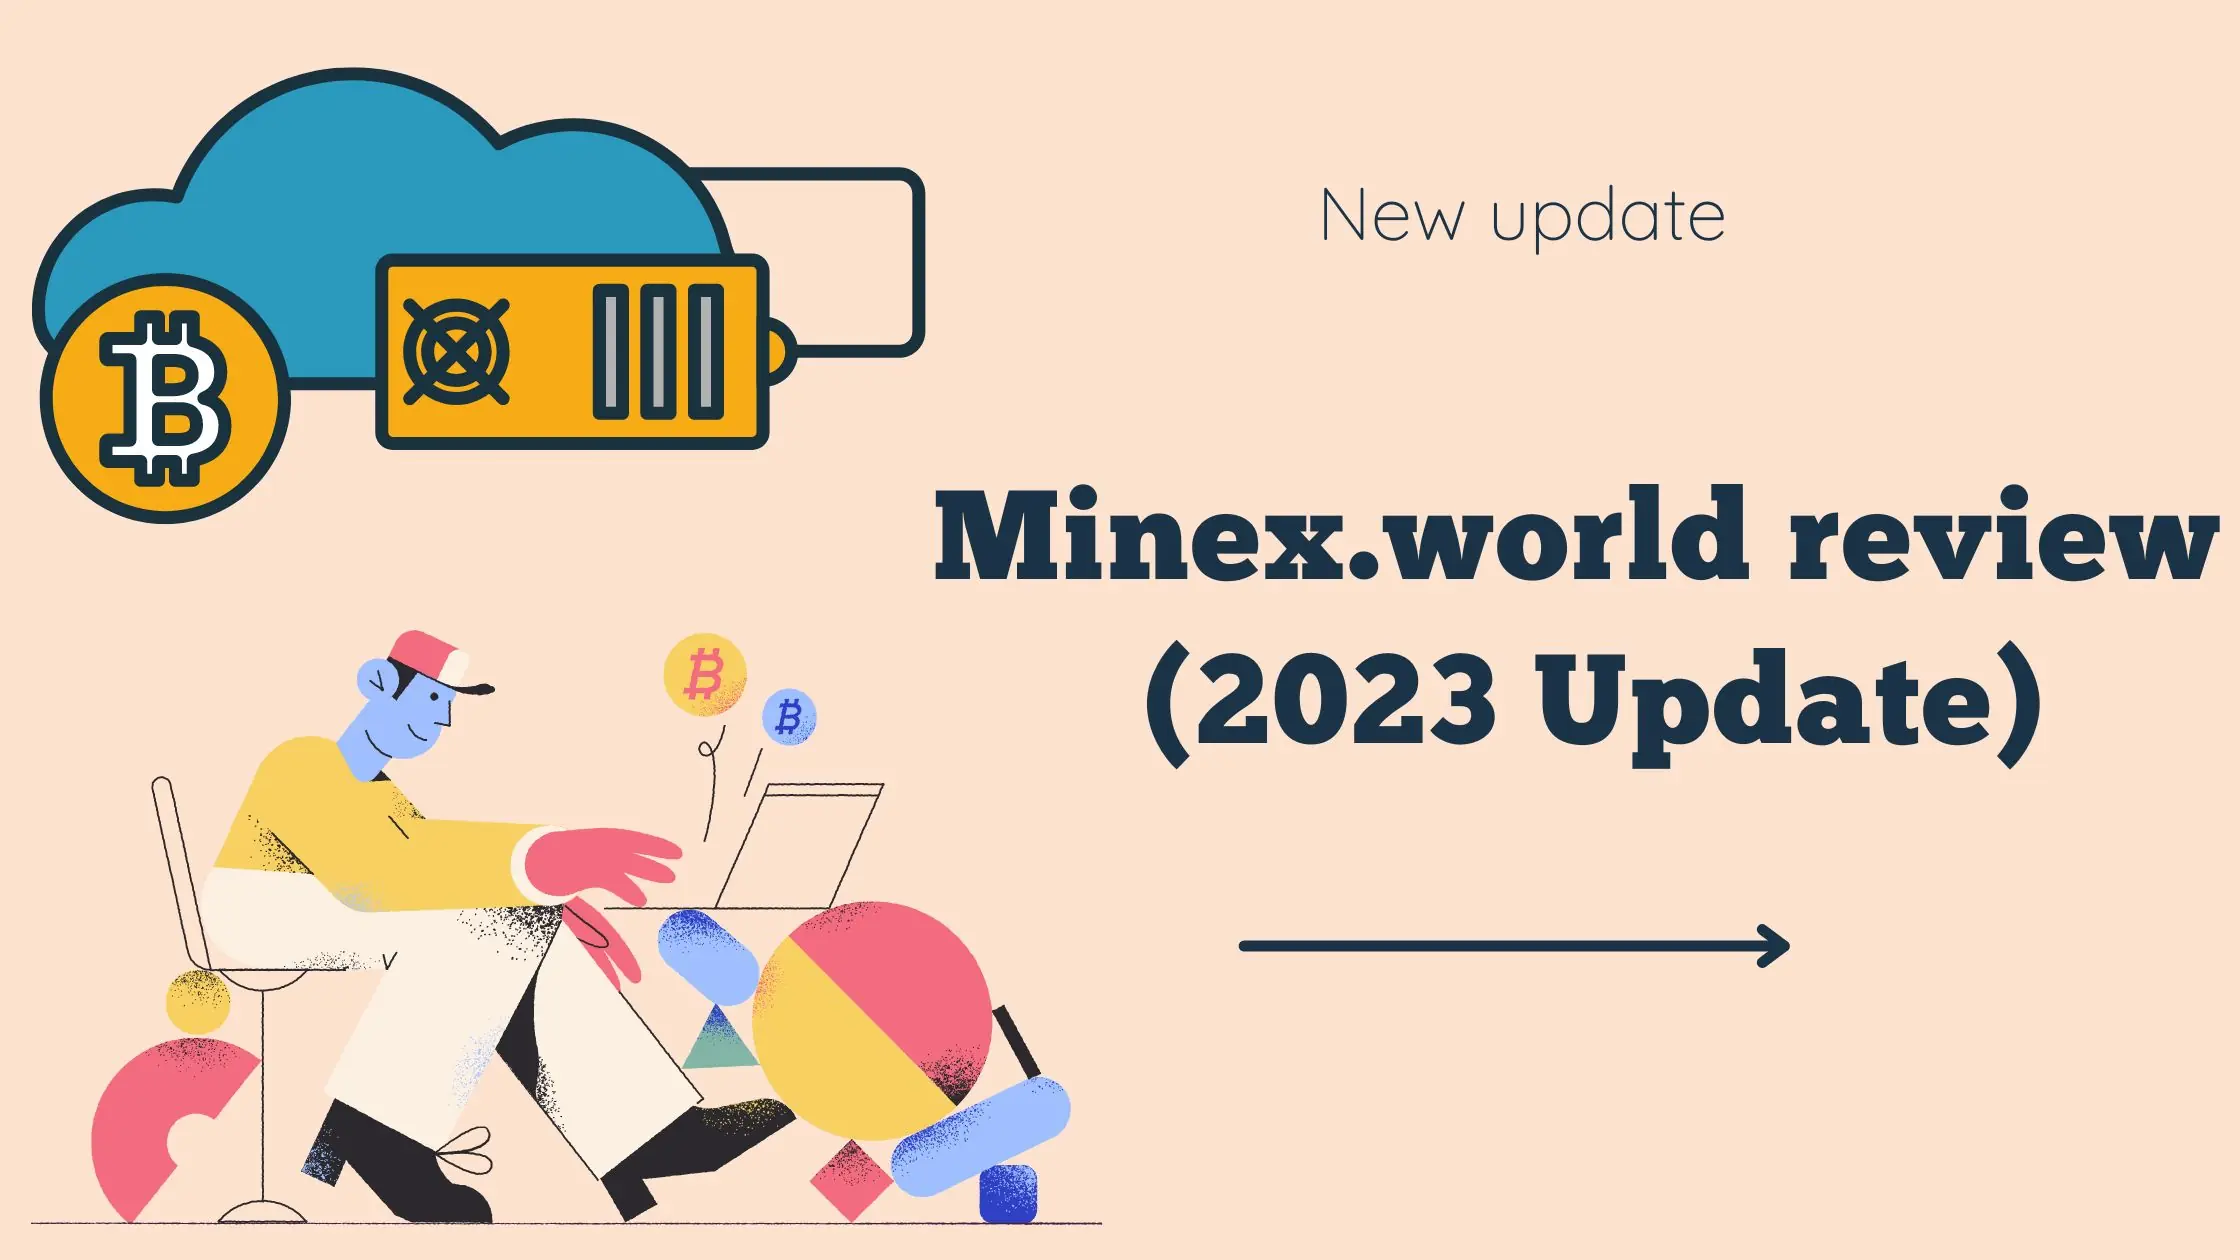 Minex.world review (2023 Update)